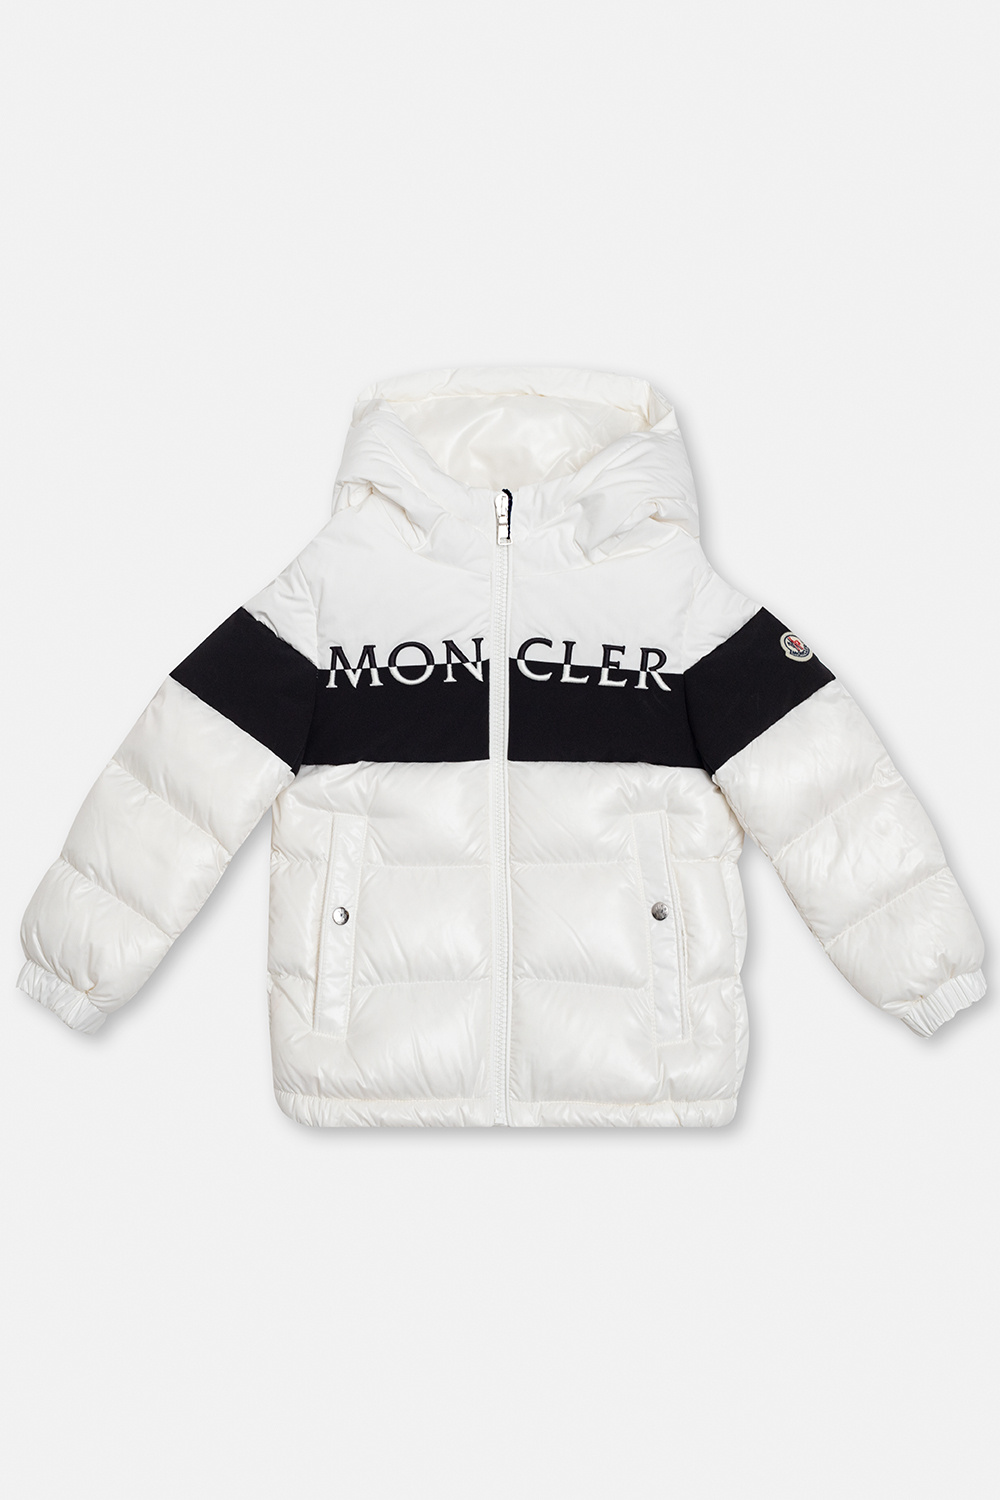 Moncler Enfant ‘Laotari’ down the jacket